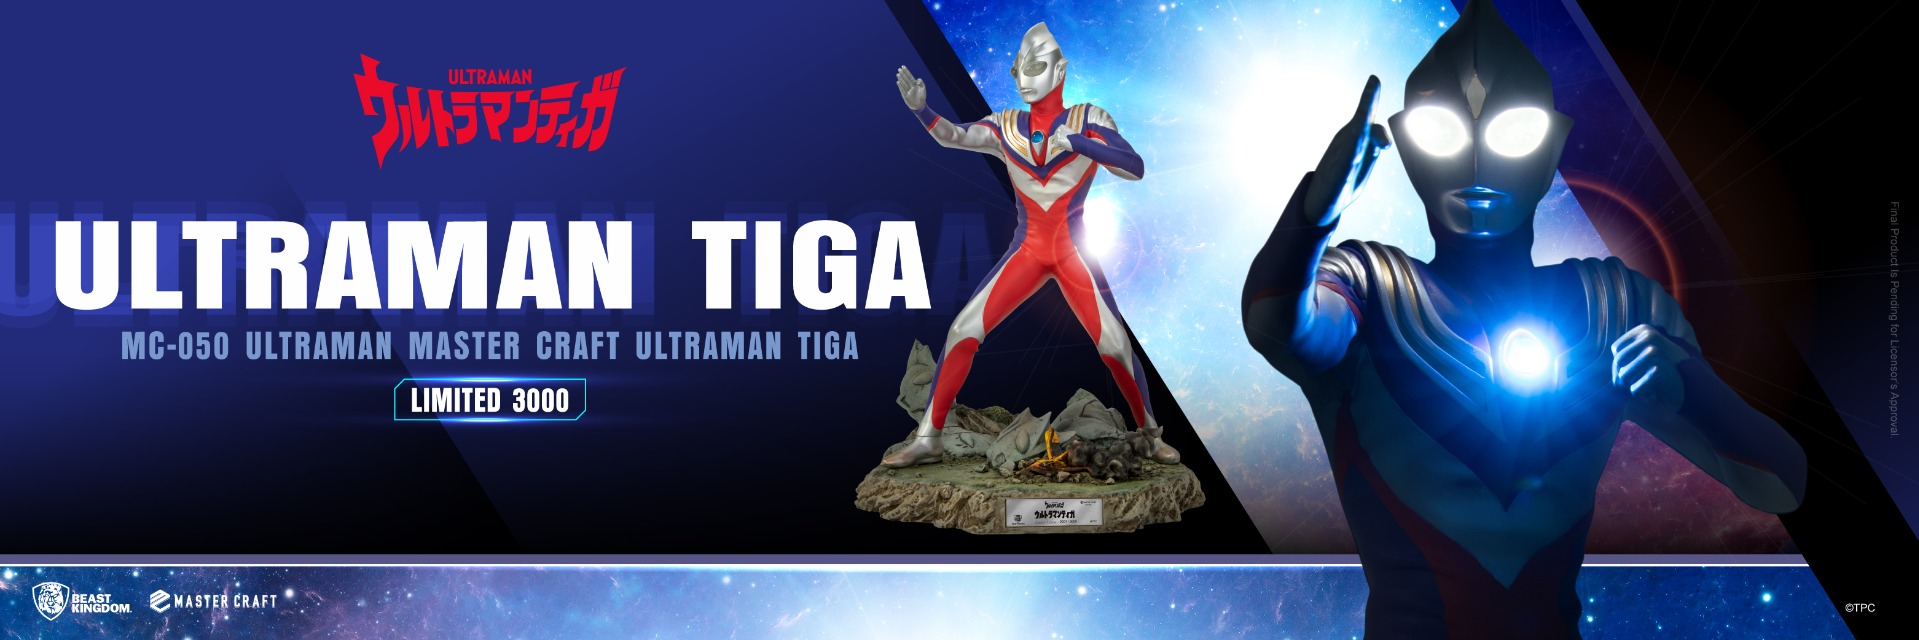 MC-050 Ultraman Master Craft Ultraman Tiga